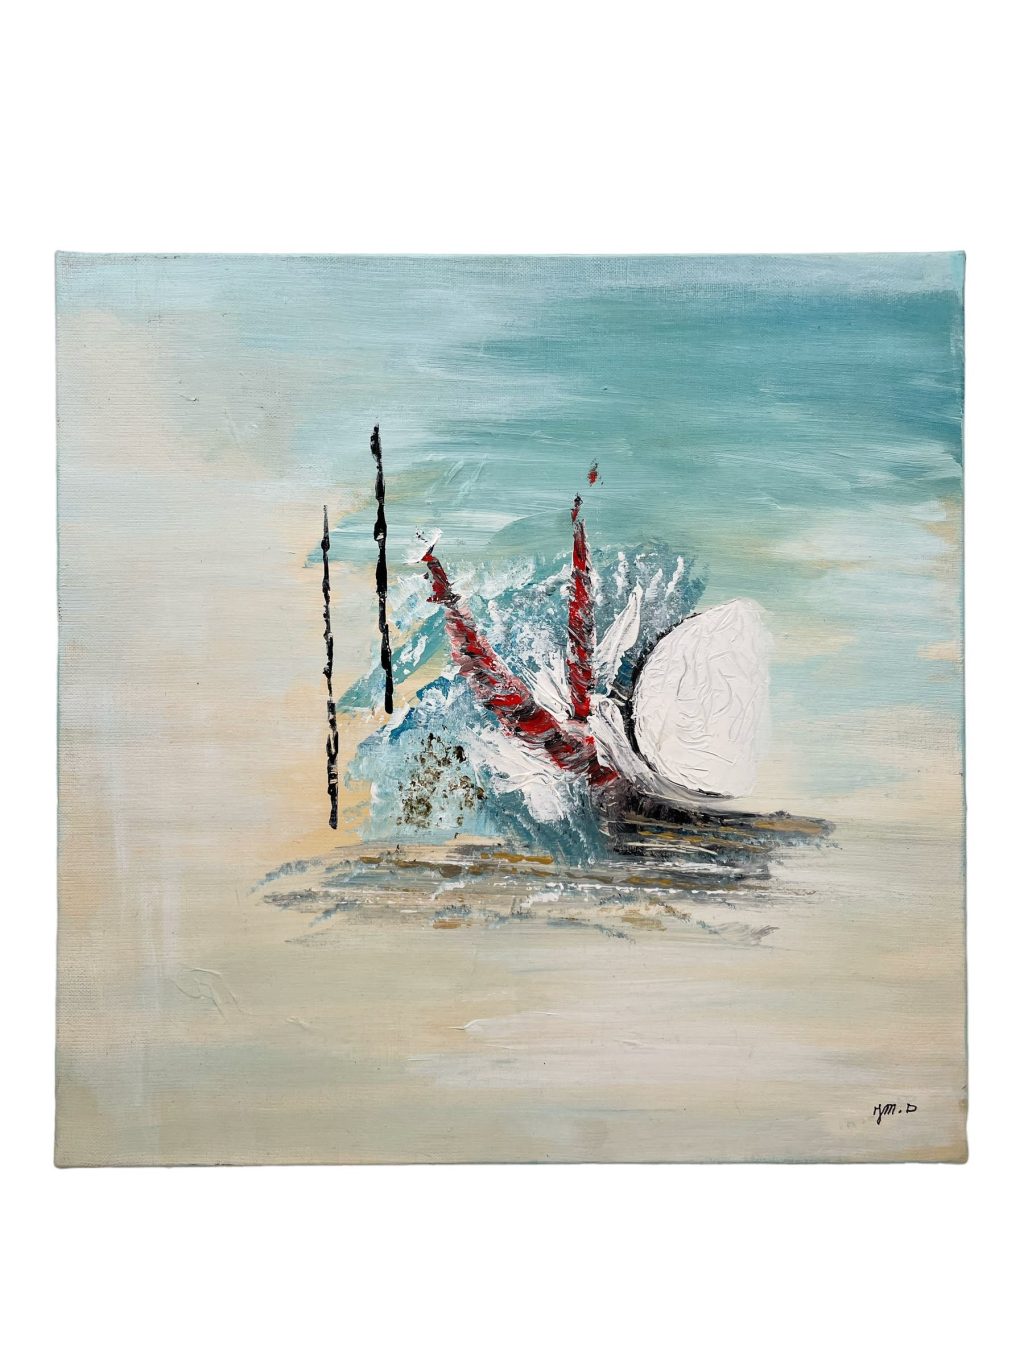 Vintage French “Turbulence” Acrylic Painting On Canvas Wall Decor Decoration Boats Sailing Sea Coast c1990-2000’s